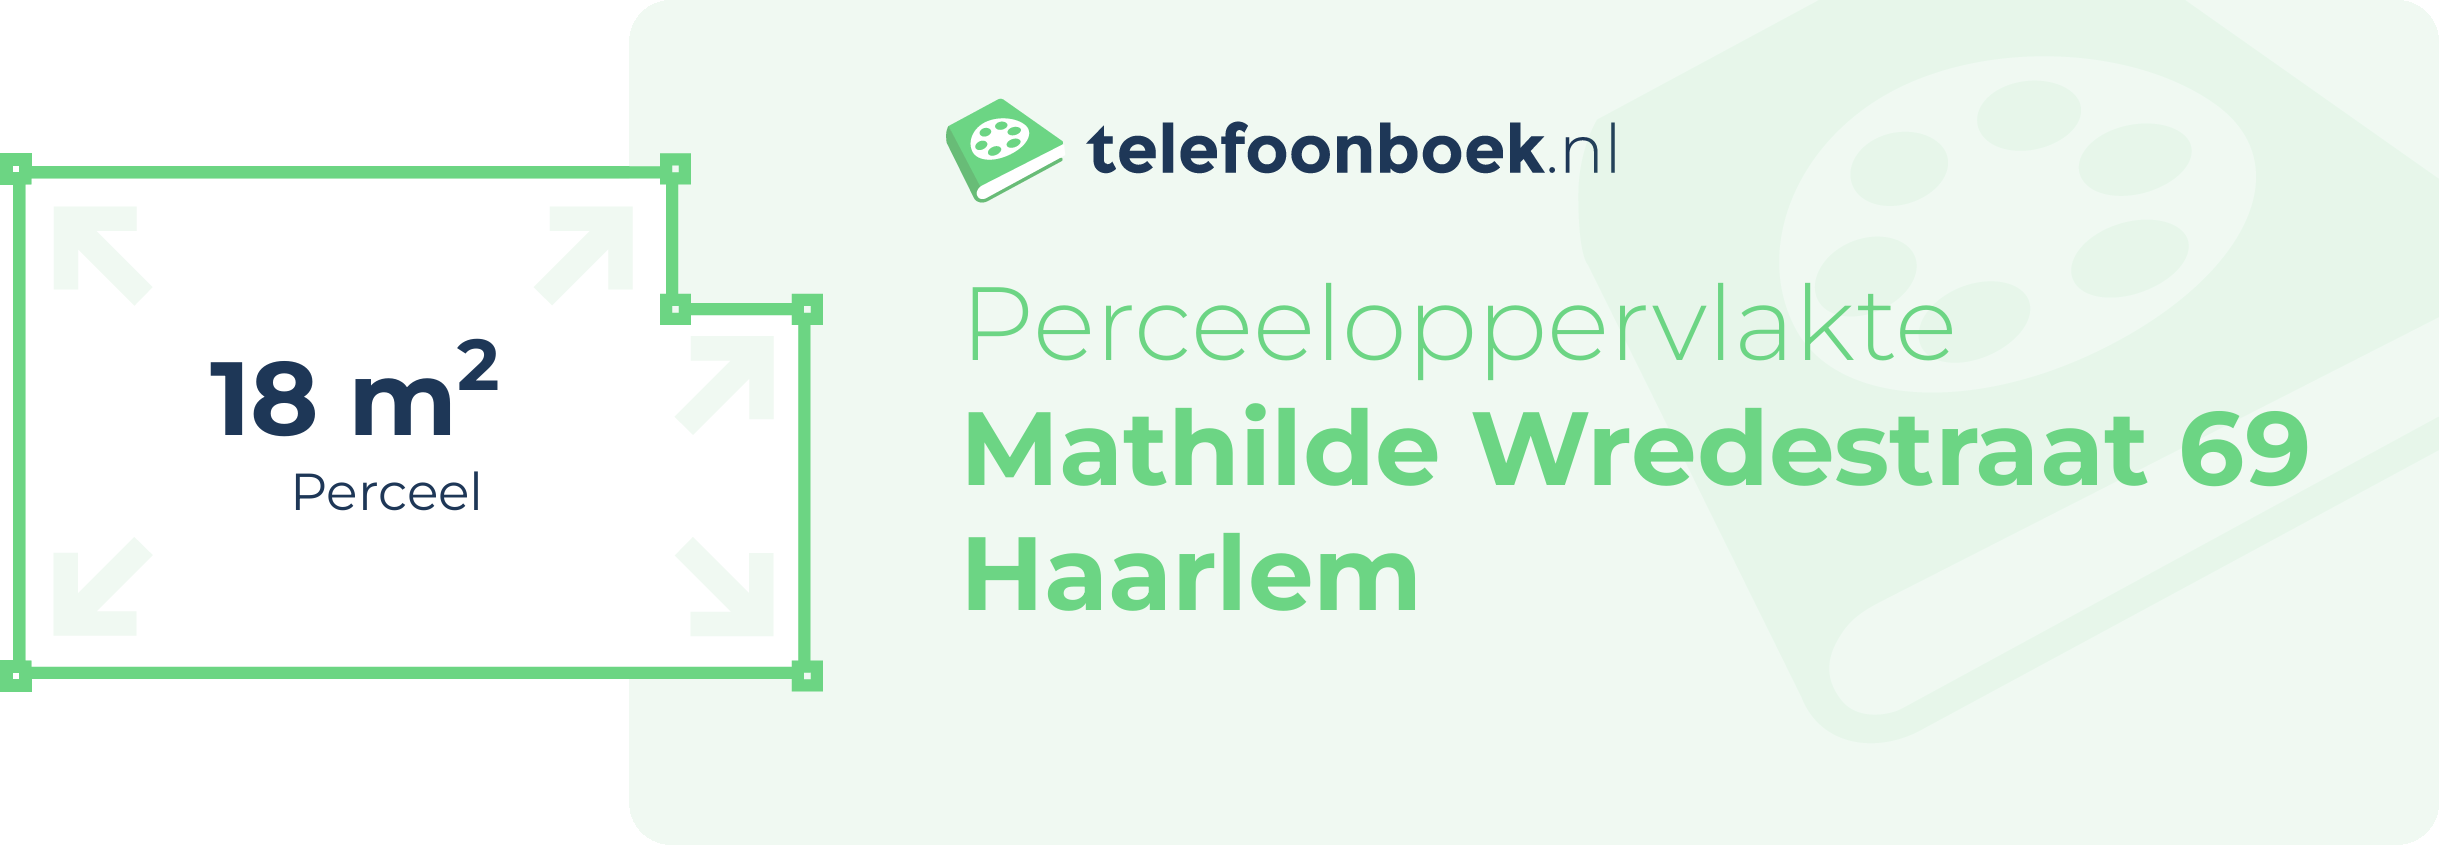 Perceeloppervlakte Mathilde Wredestraat 69 Haarlem